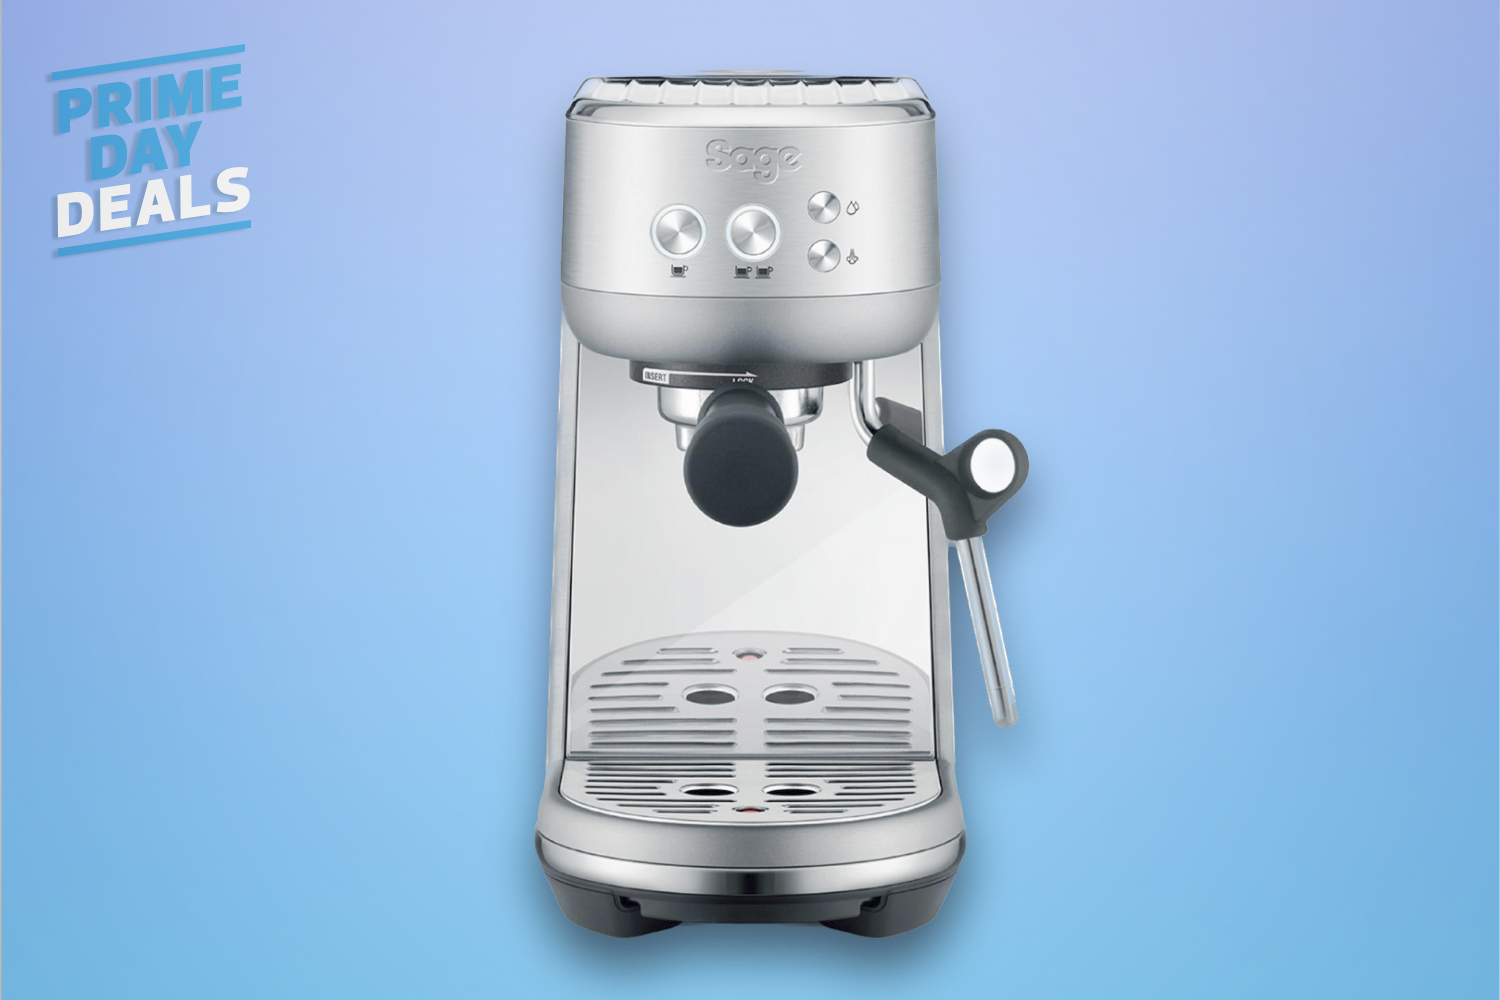 Sage's Bambino espresso machine is 40% for Prime Big Deal Days